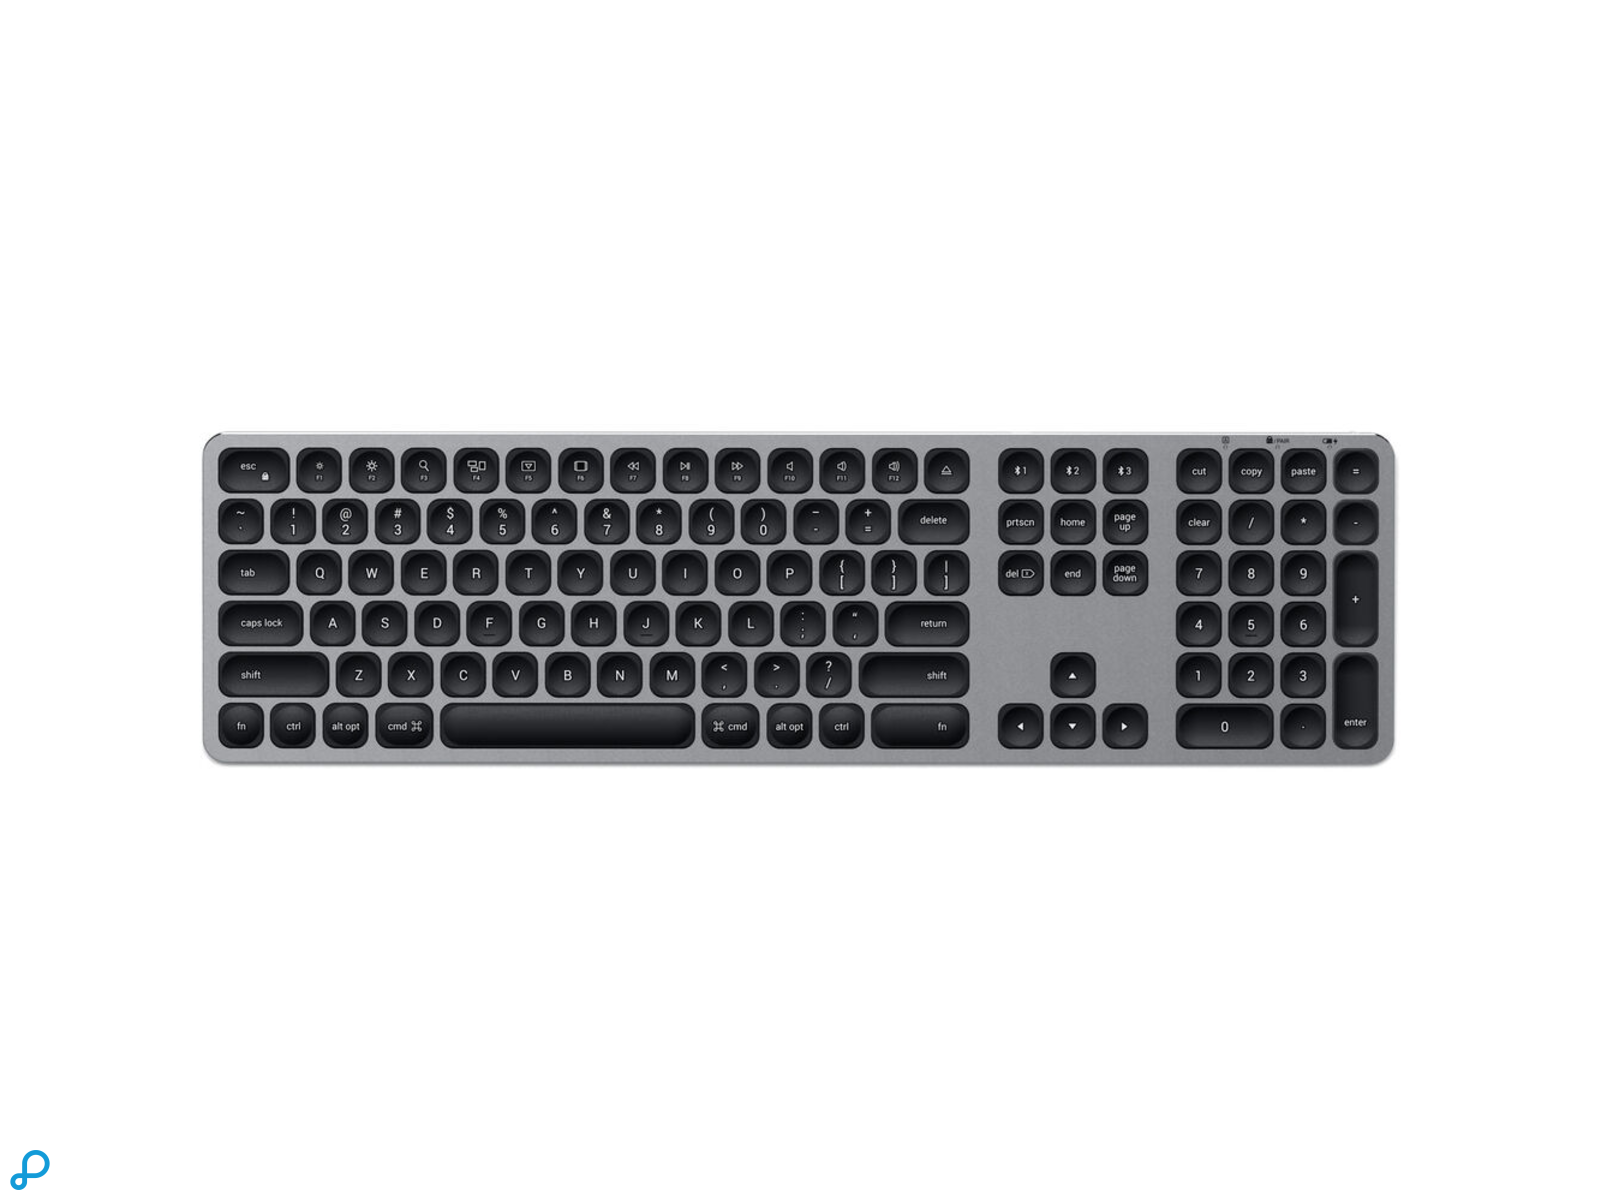 Satechi wireless aluminum keyboard for Mac - space gray-1